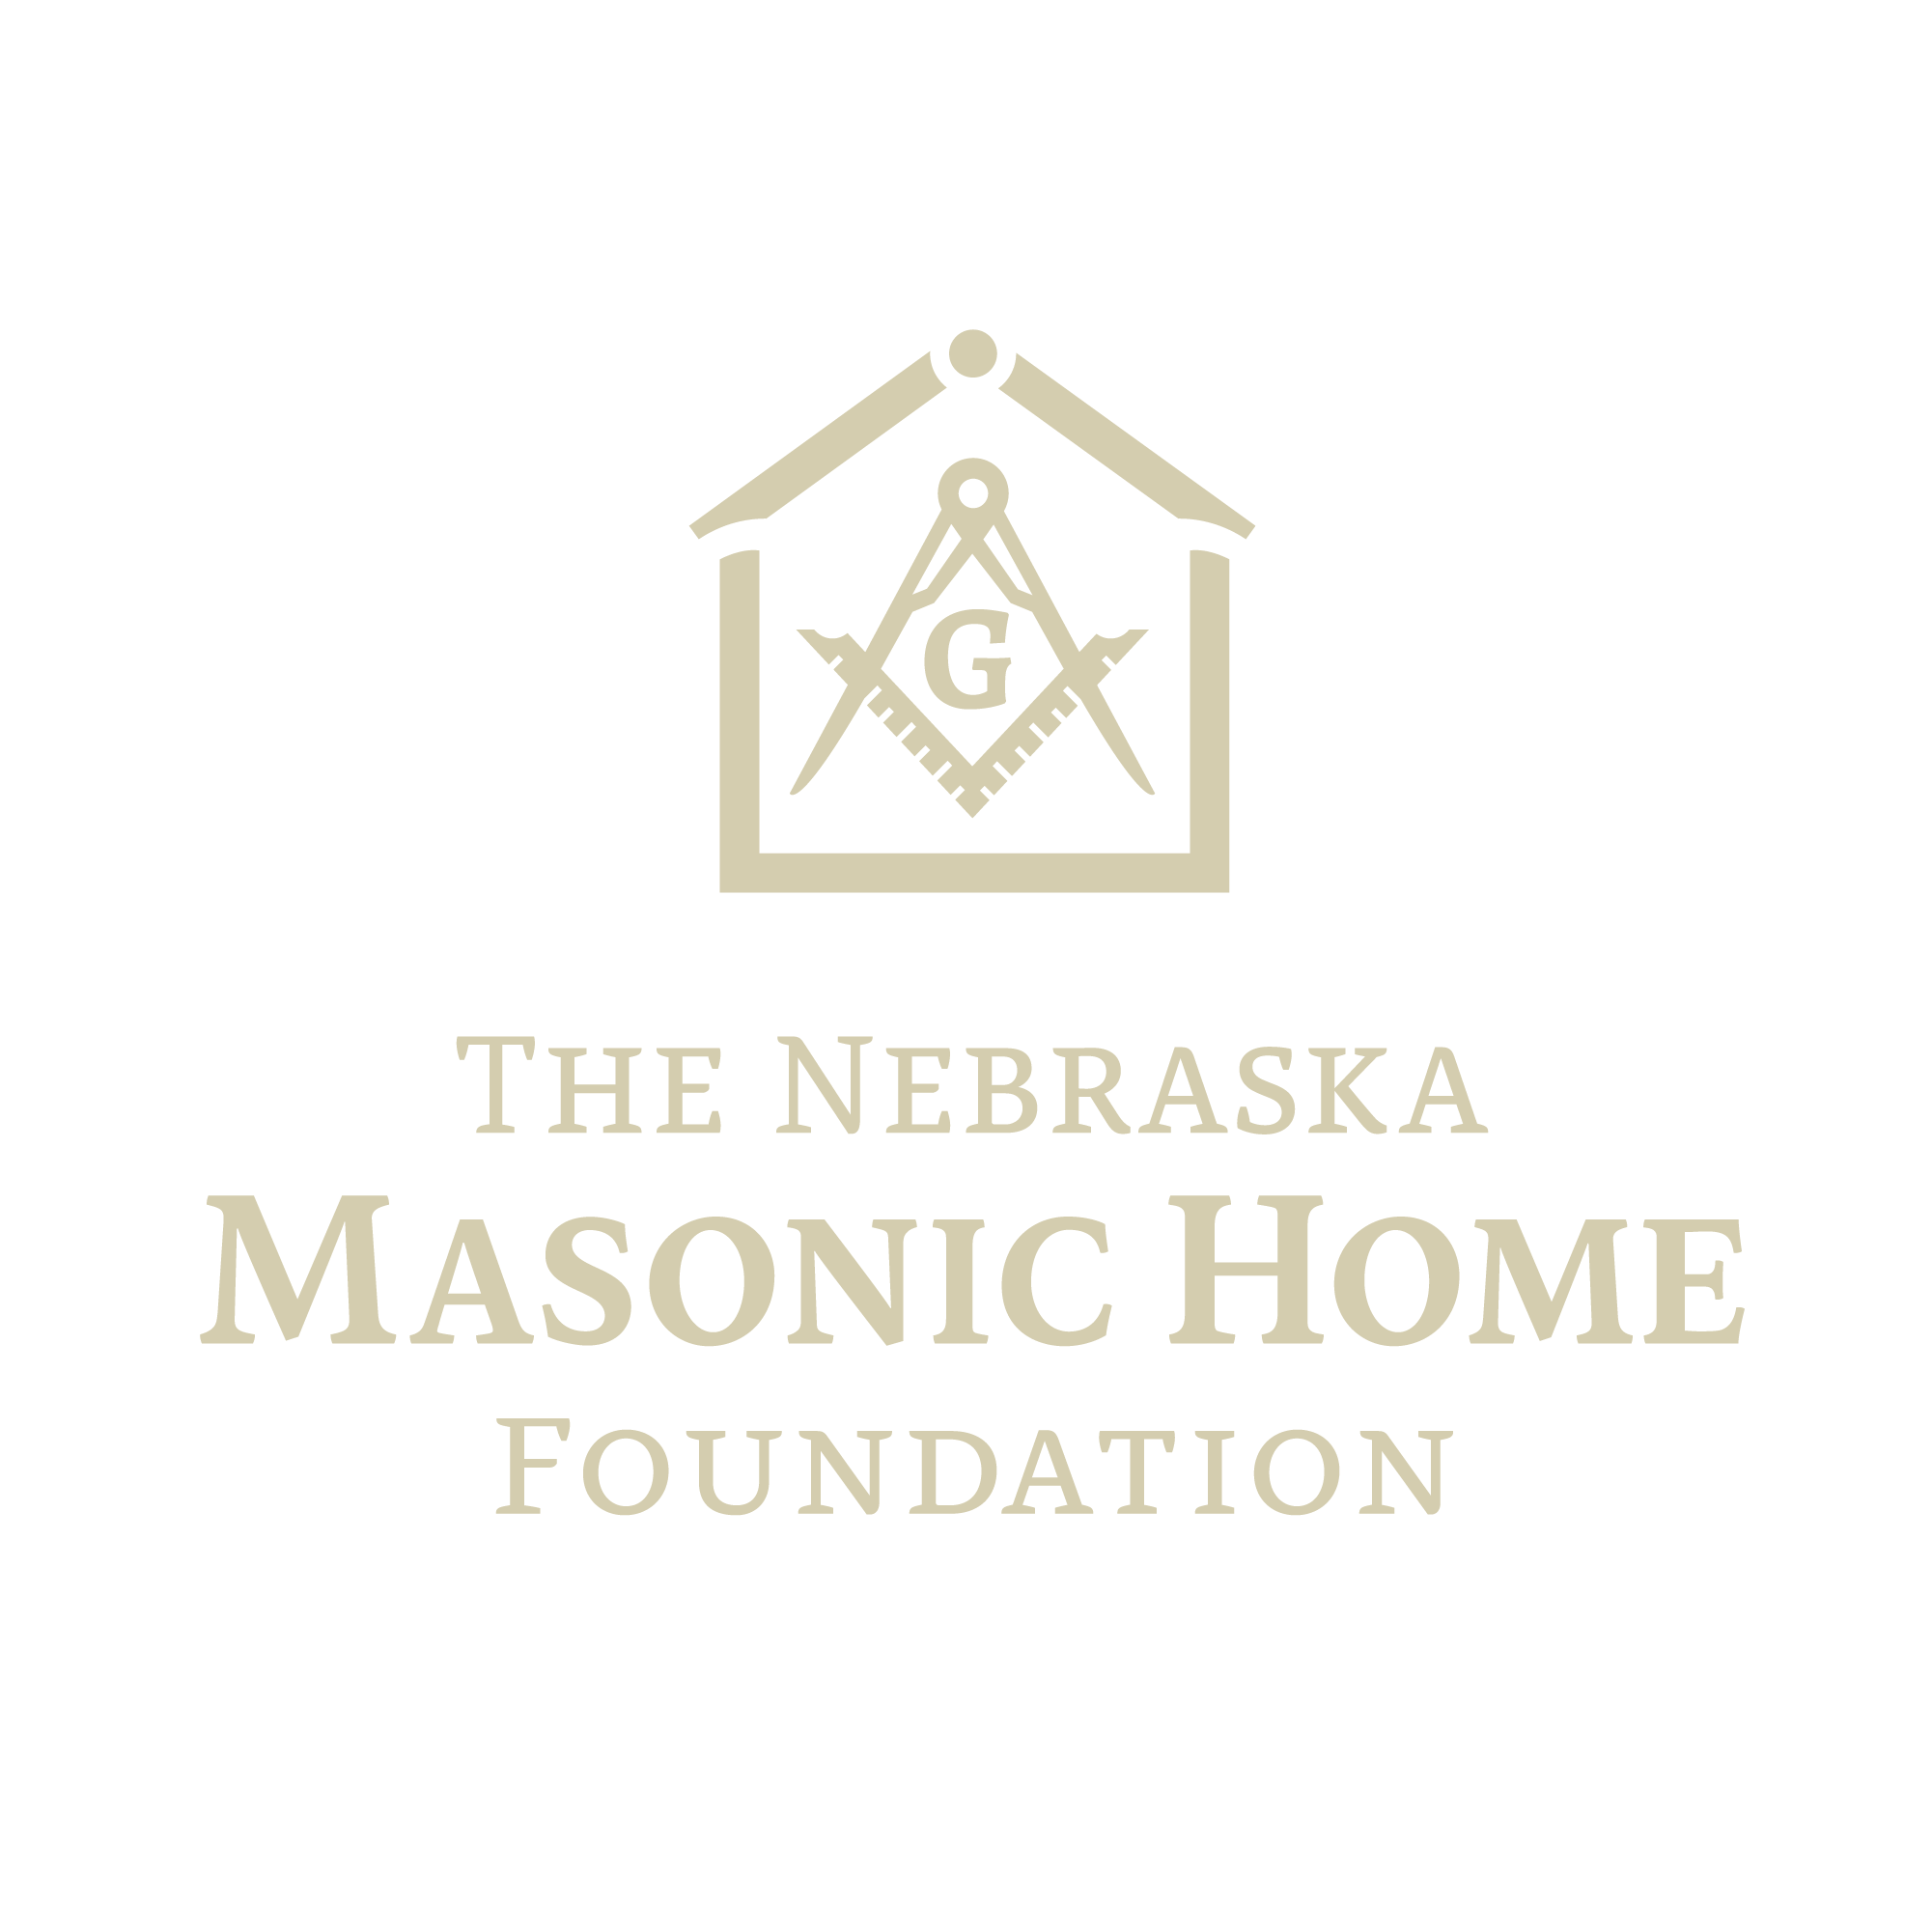 The Nebraska Masonic Home Foundation